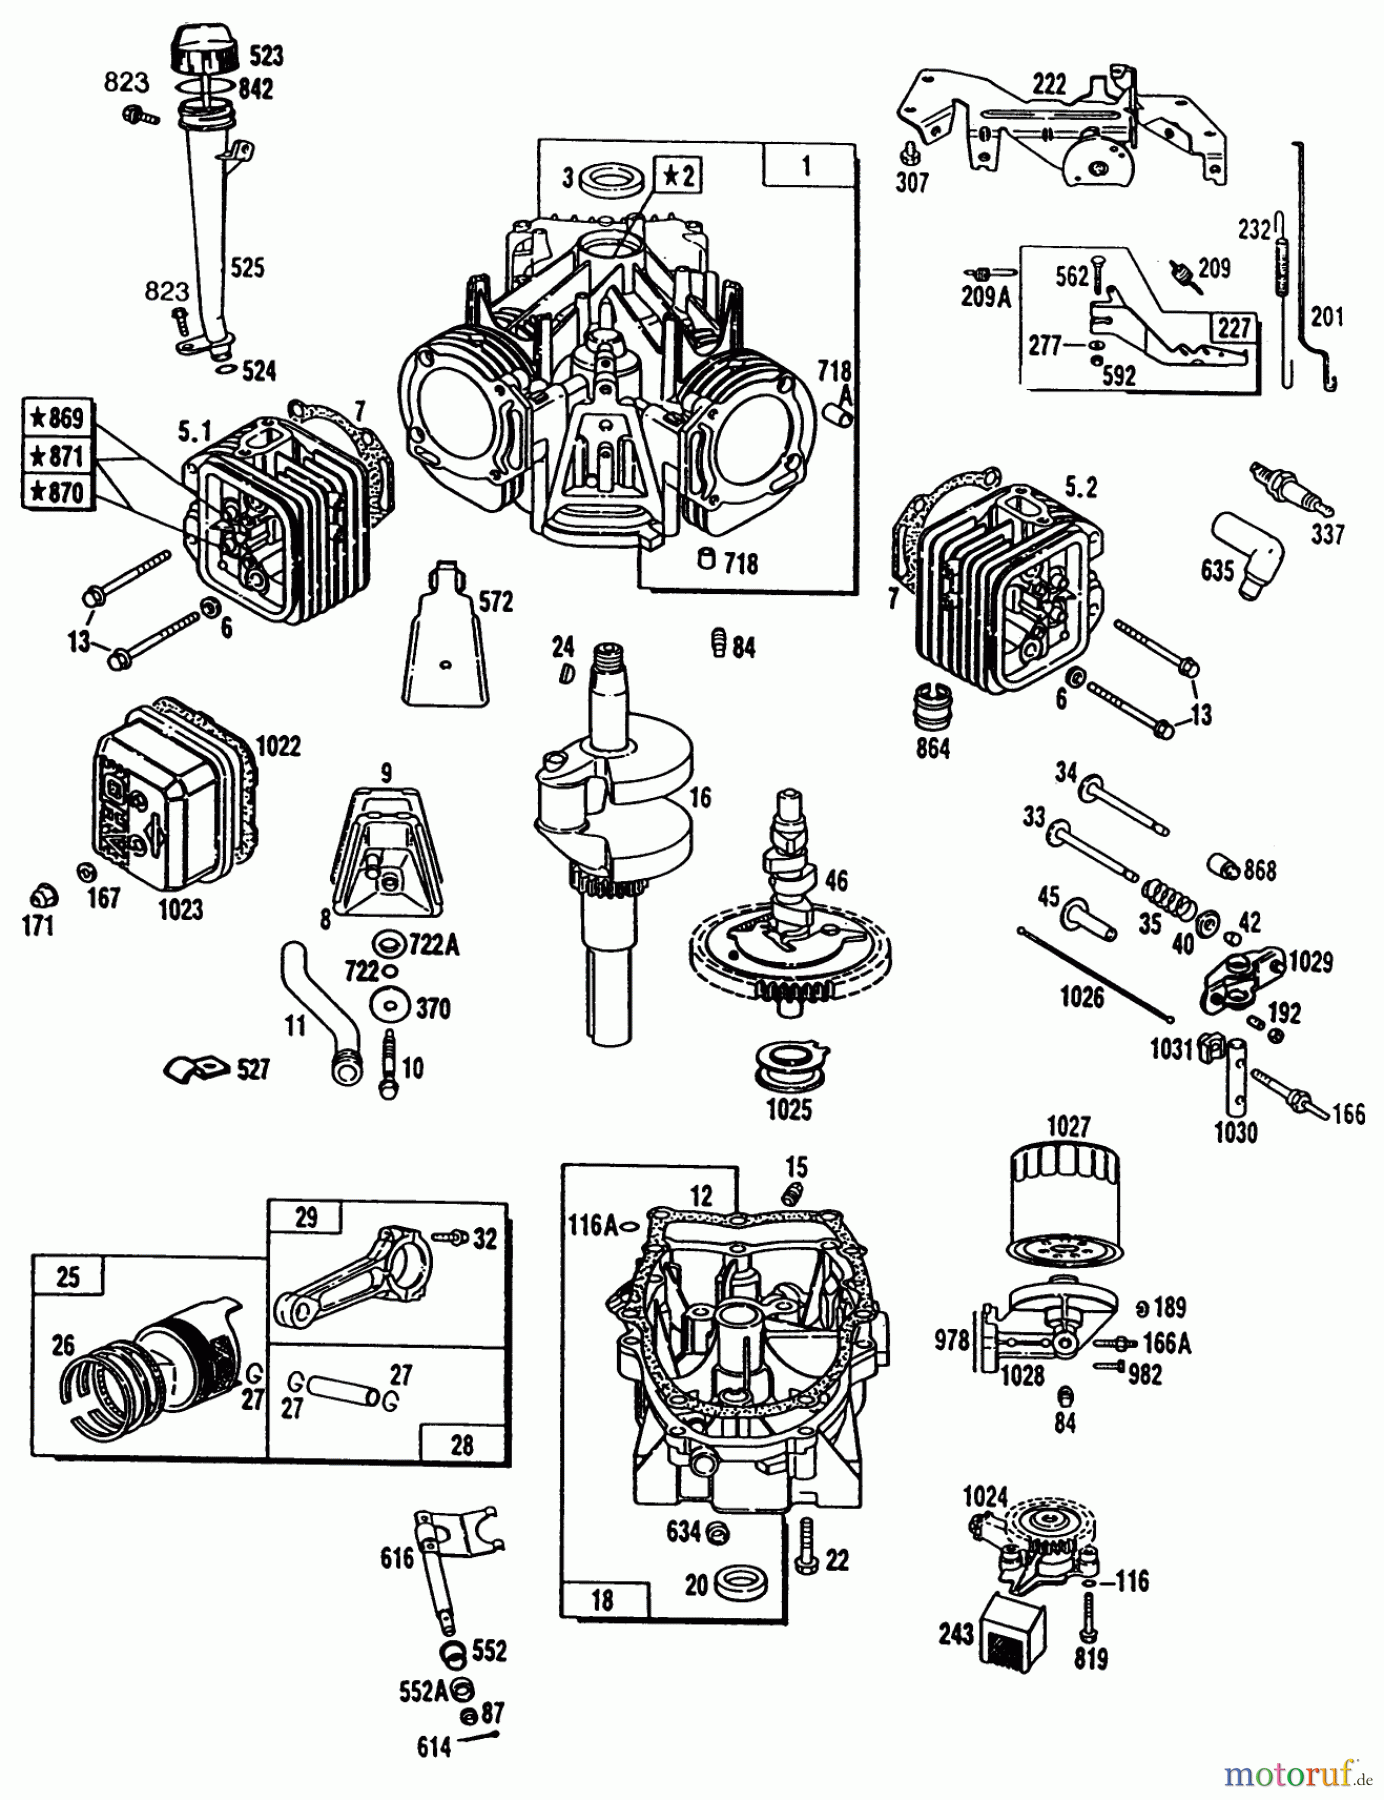  Toro Neu Mowers, Lawn & Garden Tractor Seite 1 32-16BE01 (216-H) - Toro 216-H Tractor, 1990 CYLINDER, OIL PUMP AND CRANKSHAFT